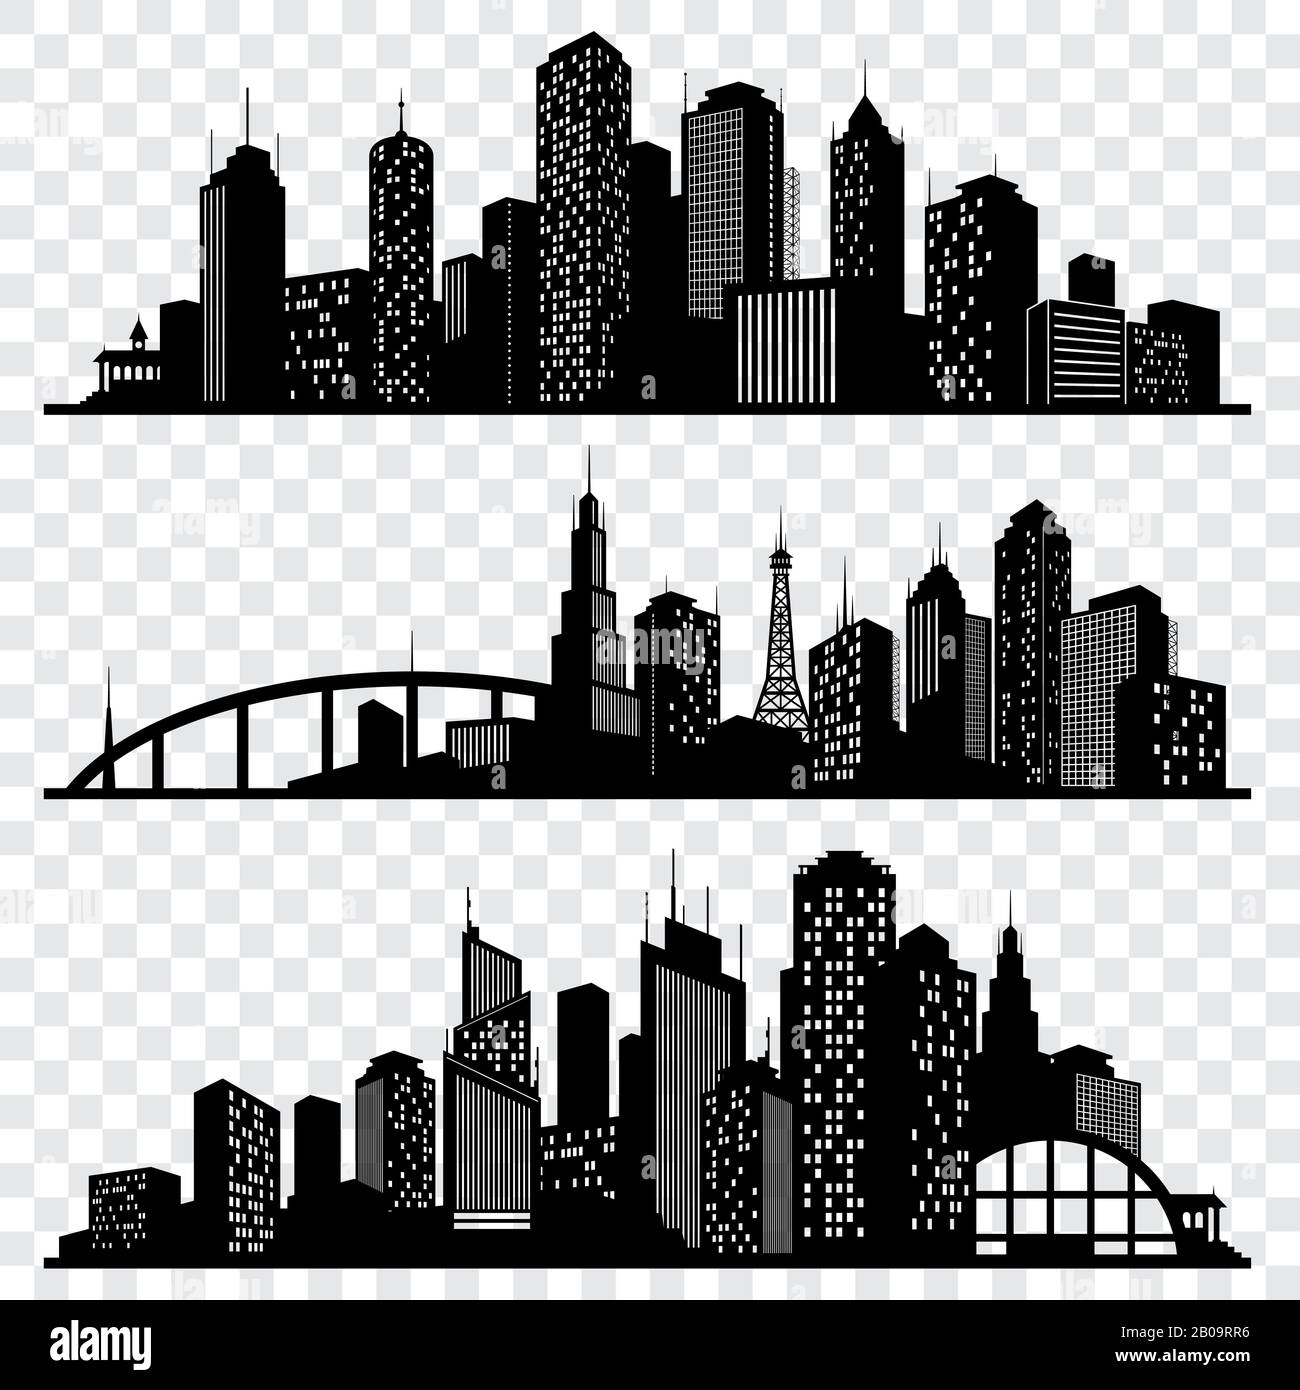 City building vector silhouettes, urban vector skylines set. Urban architecture silhouette, skyline cityscape architecture illustration Stock Vector